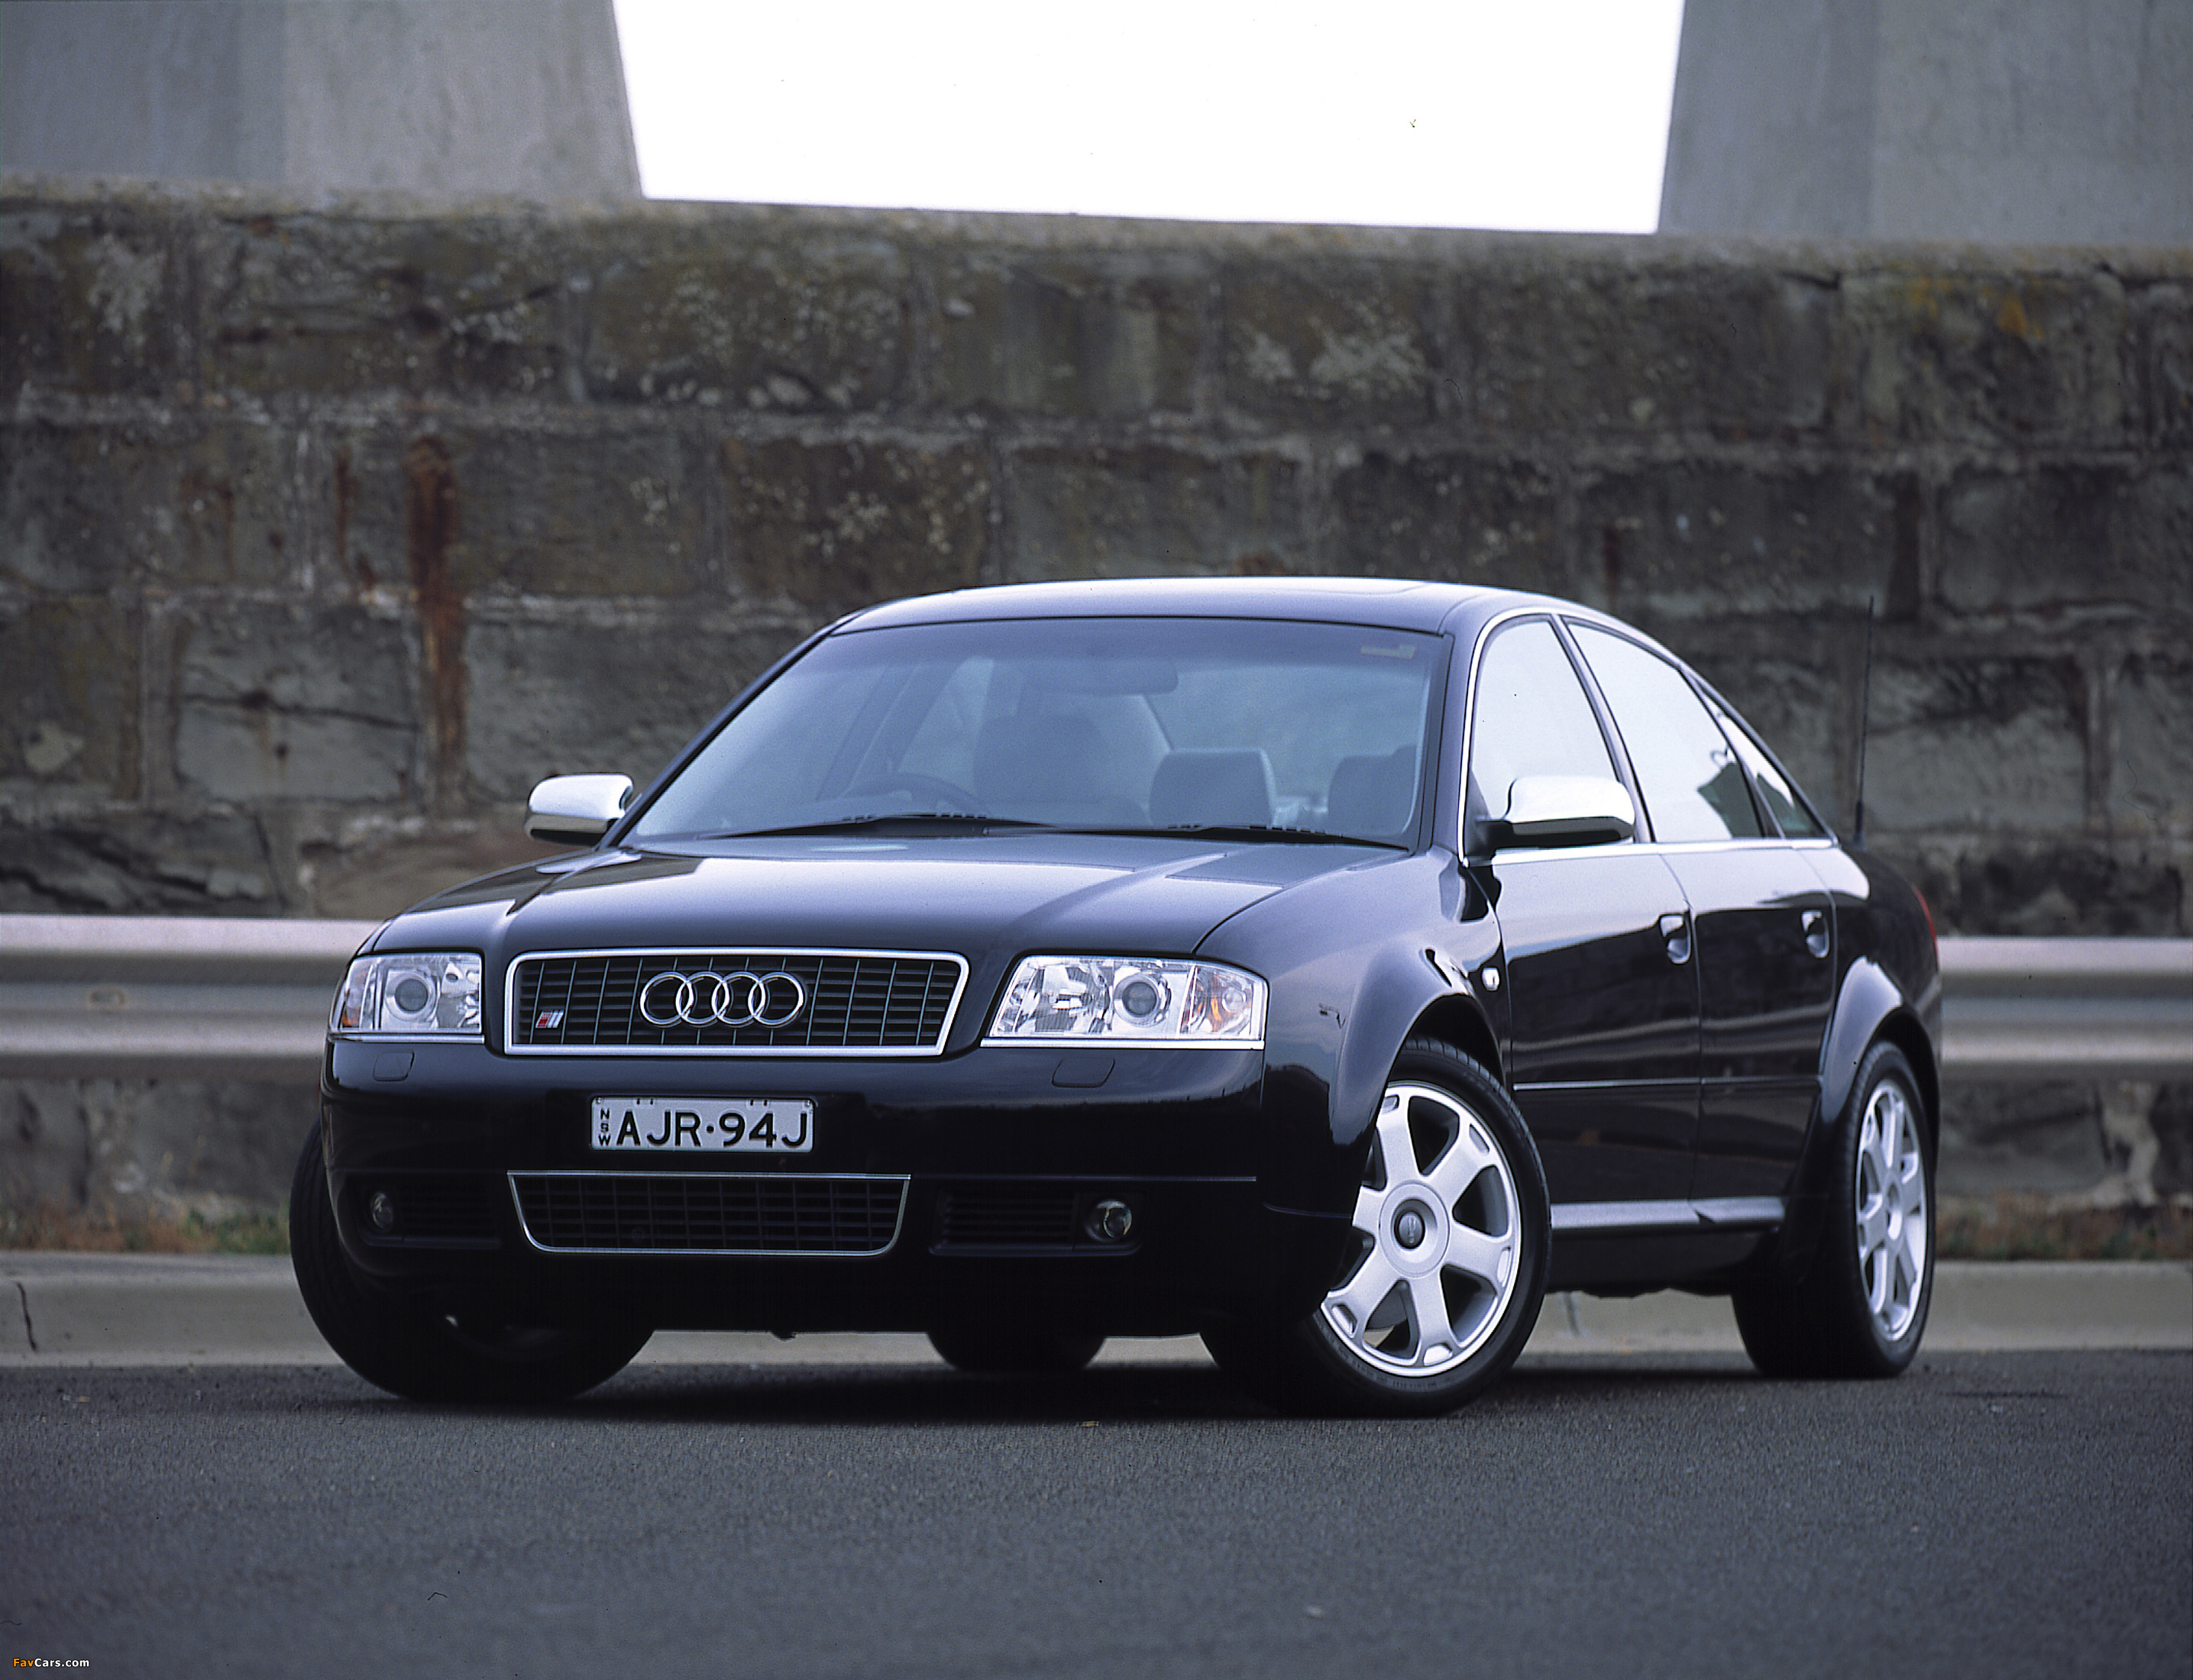 Ауди а6 с5 2001 год. Audi a6 c5 2000. Ауди s6 2001. Audi s6 c5. Audi s6 2001.